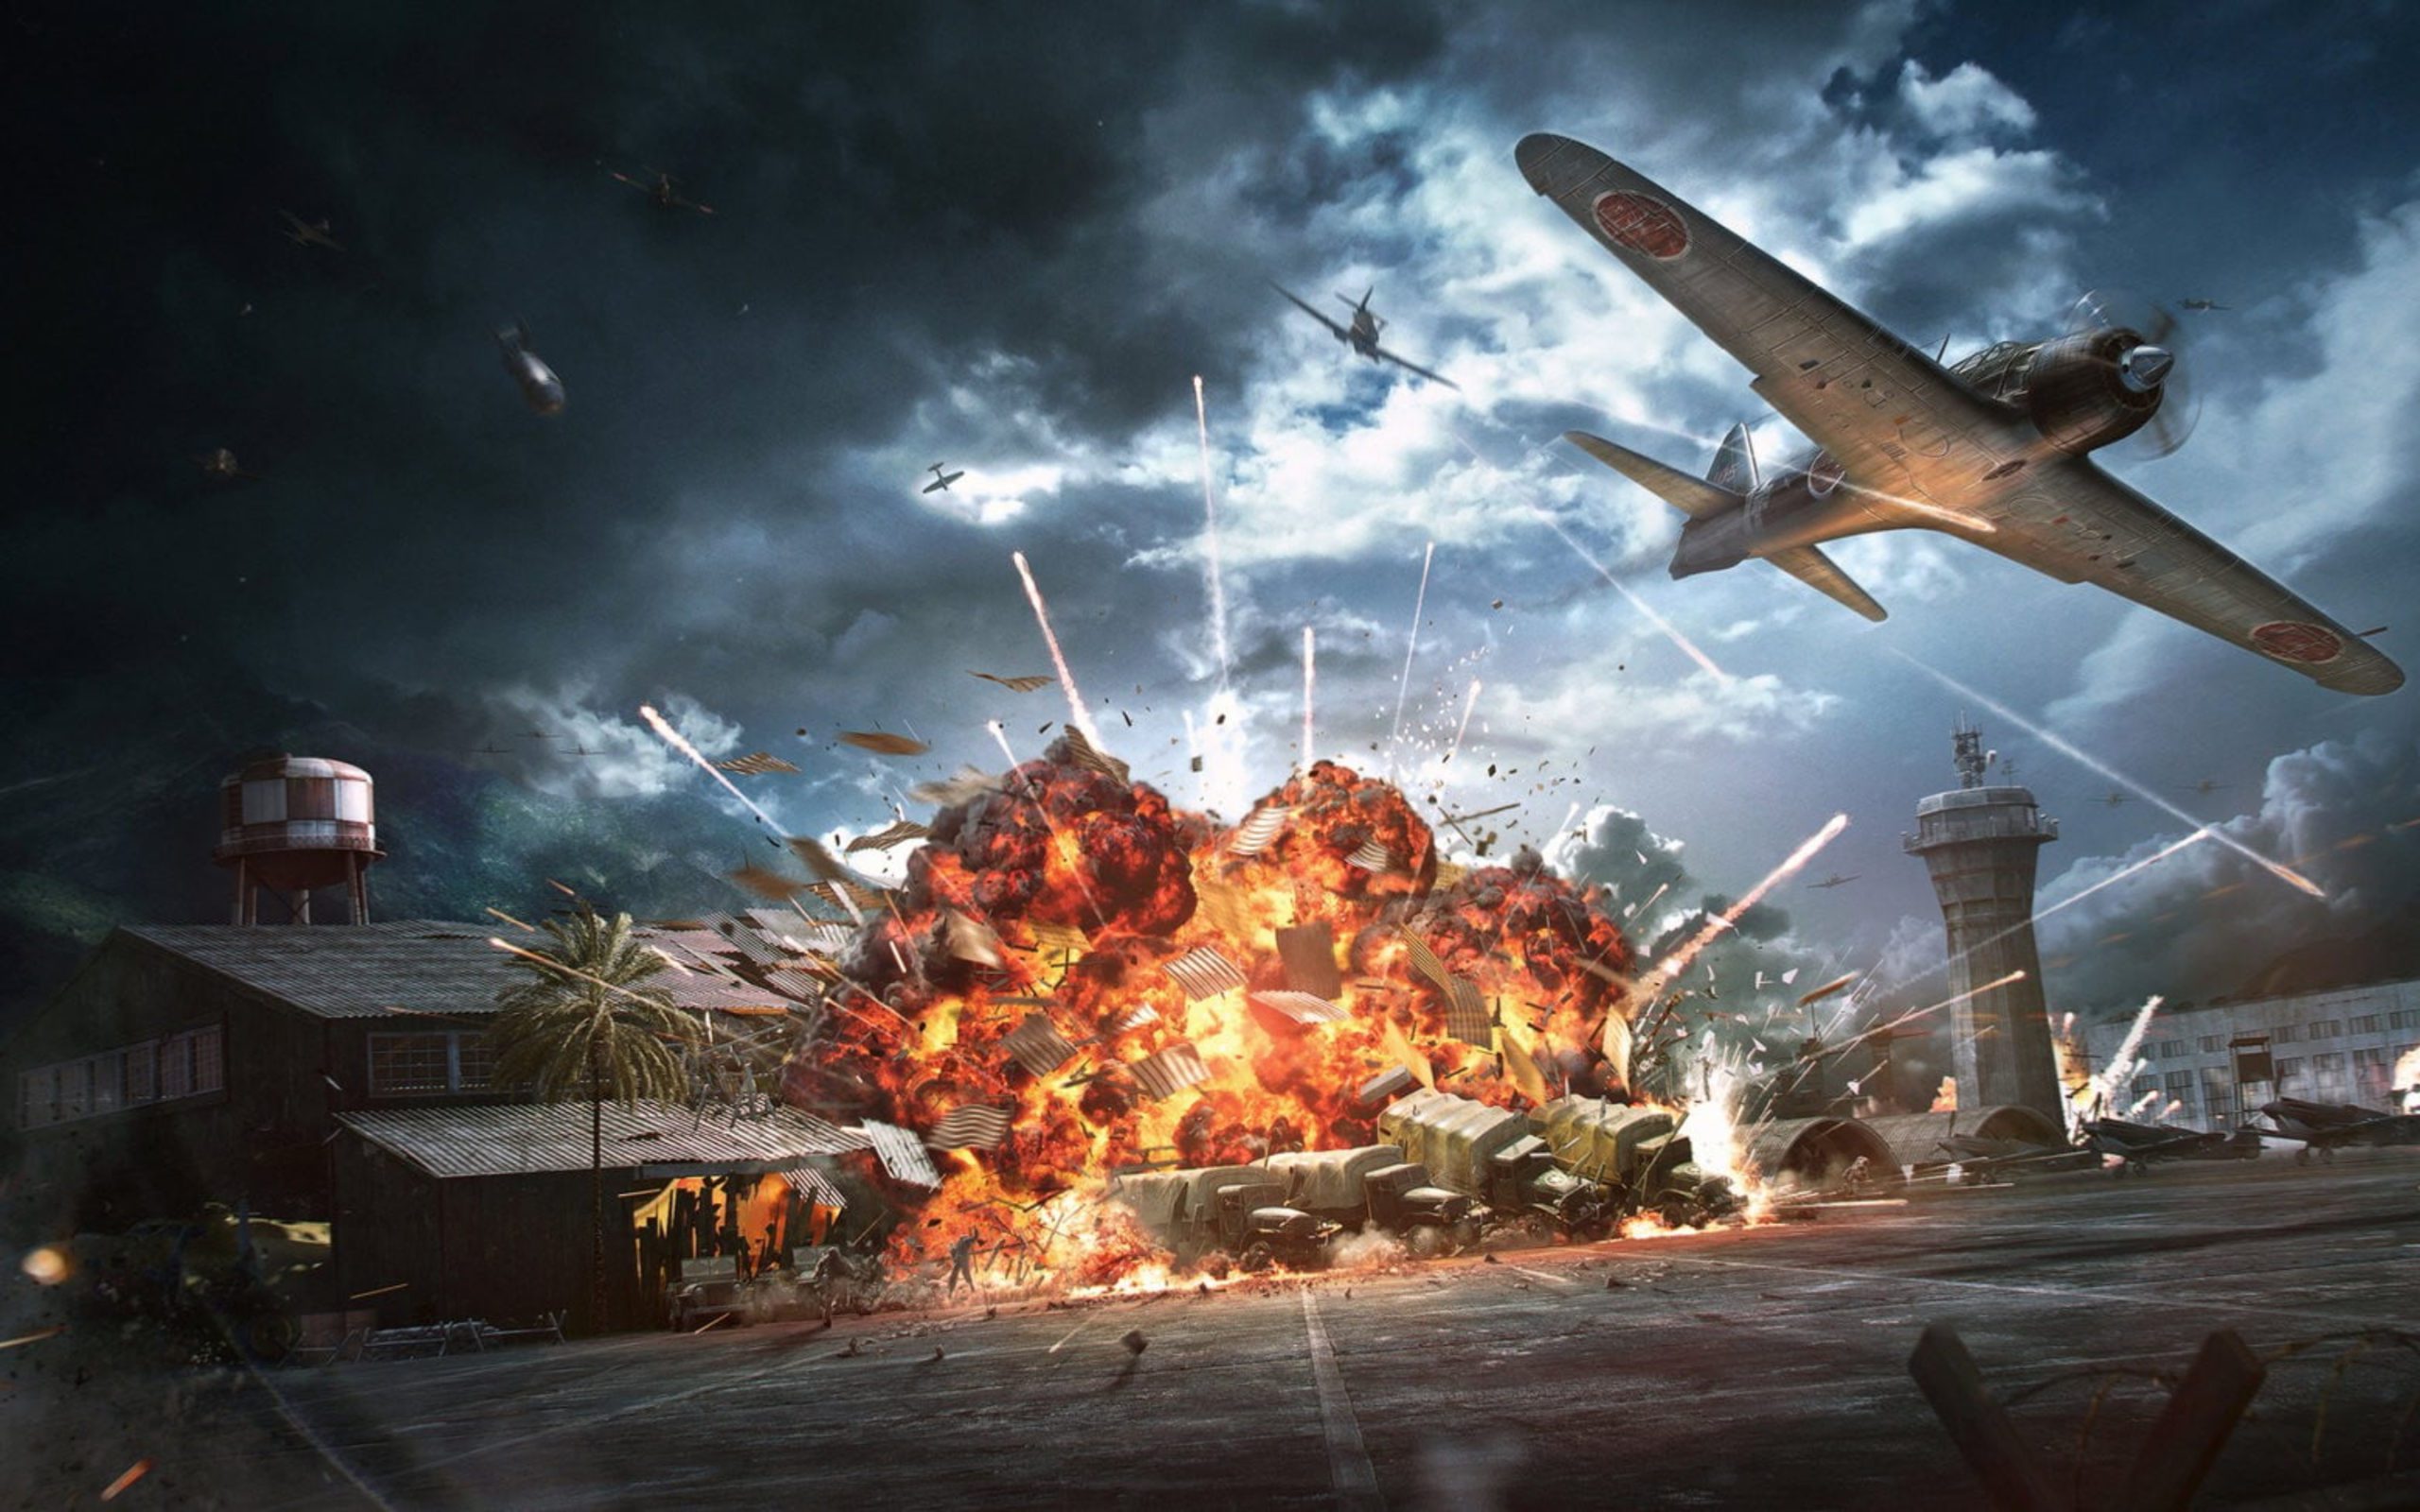 devastating surprise attack on Pearl Harbor